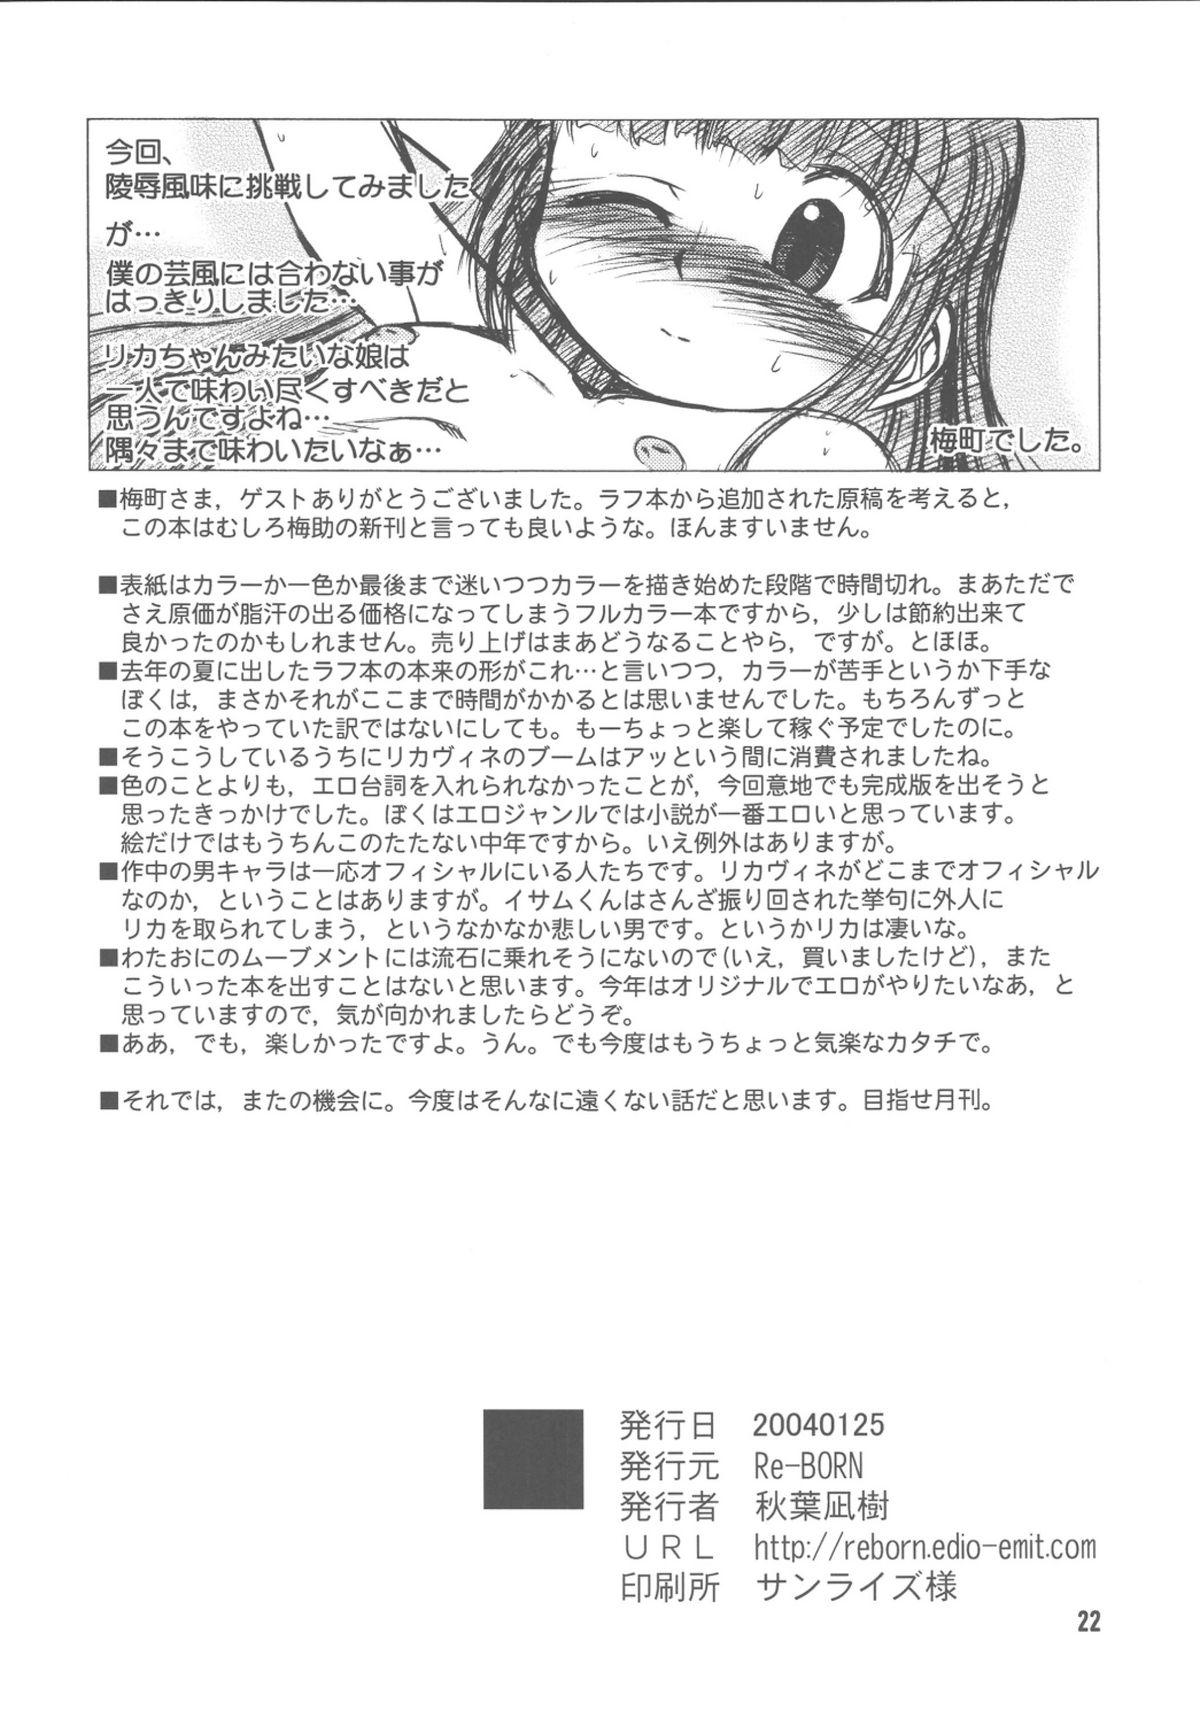 (SC22) [Oresama Memorial, PSYCO DELICIOUS, Re-BORN (Akiba Nagi, Umemachi Syouji) Binetsu to Vignette FULL COMP 14